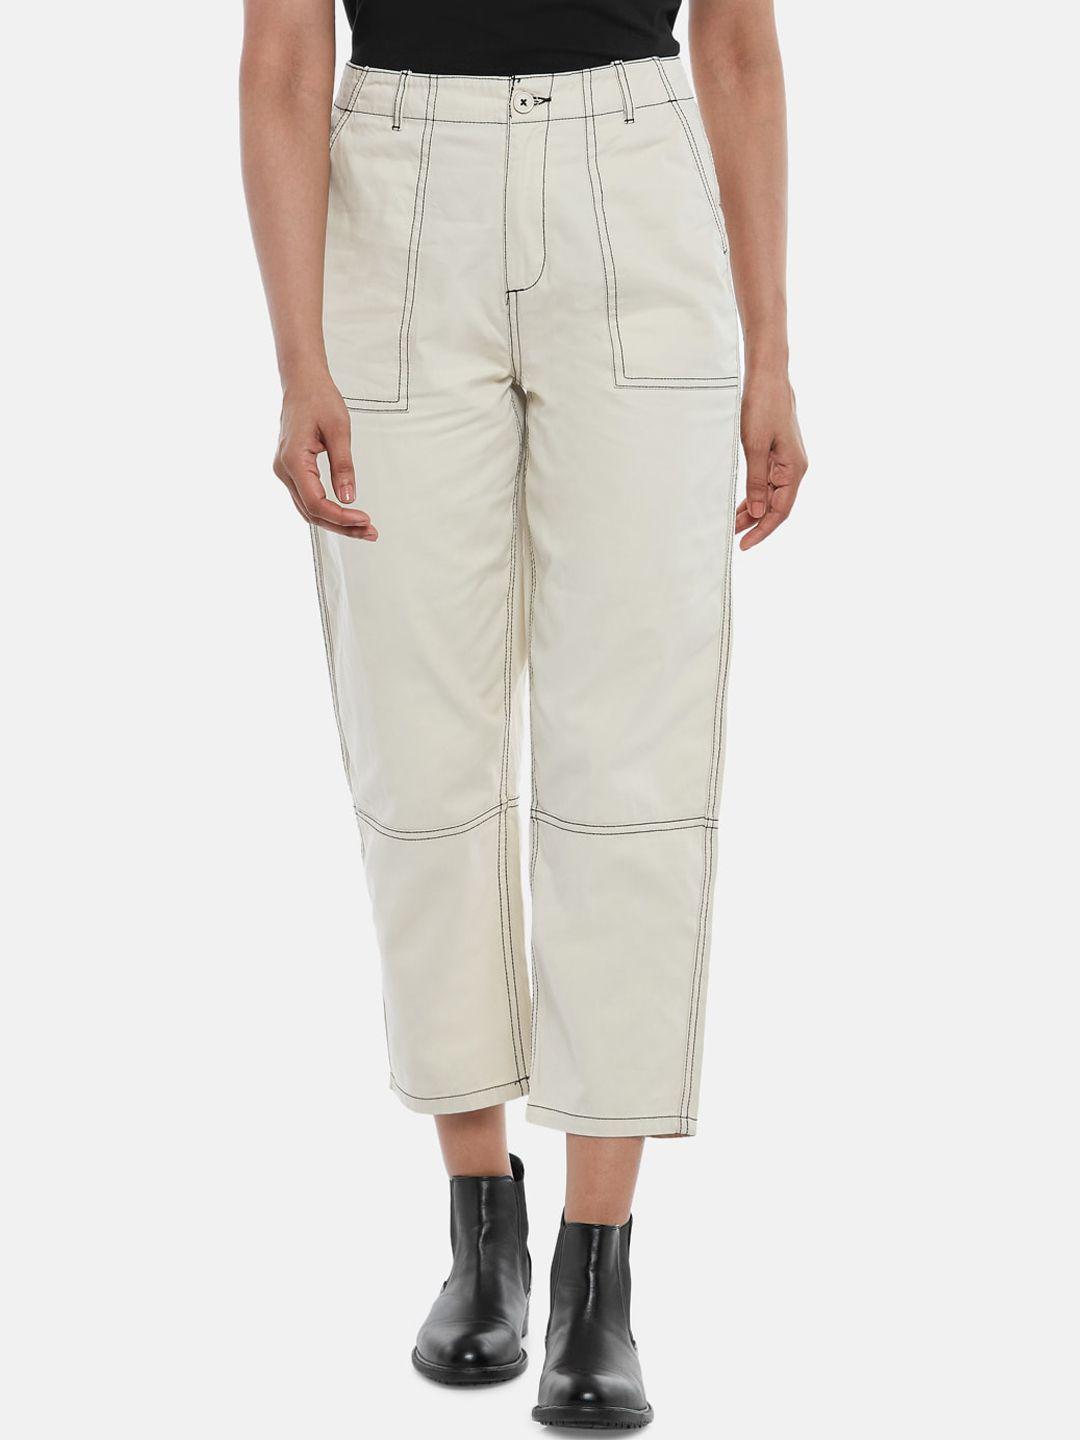 sf jeans by pantaloons women cotton jeans